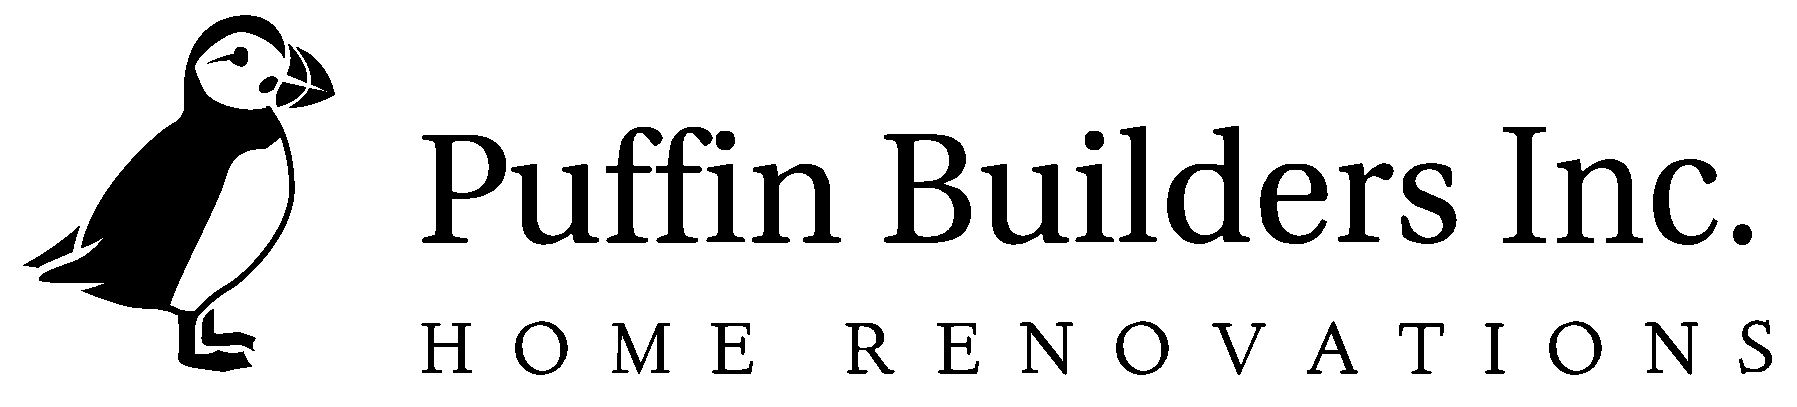 Puffin Builders, Inc. Logo